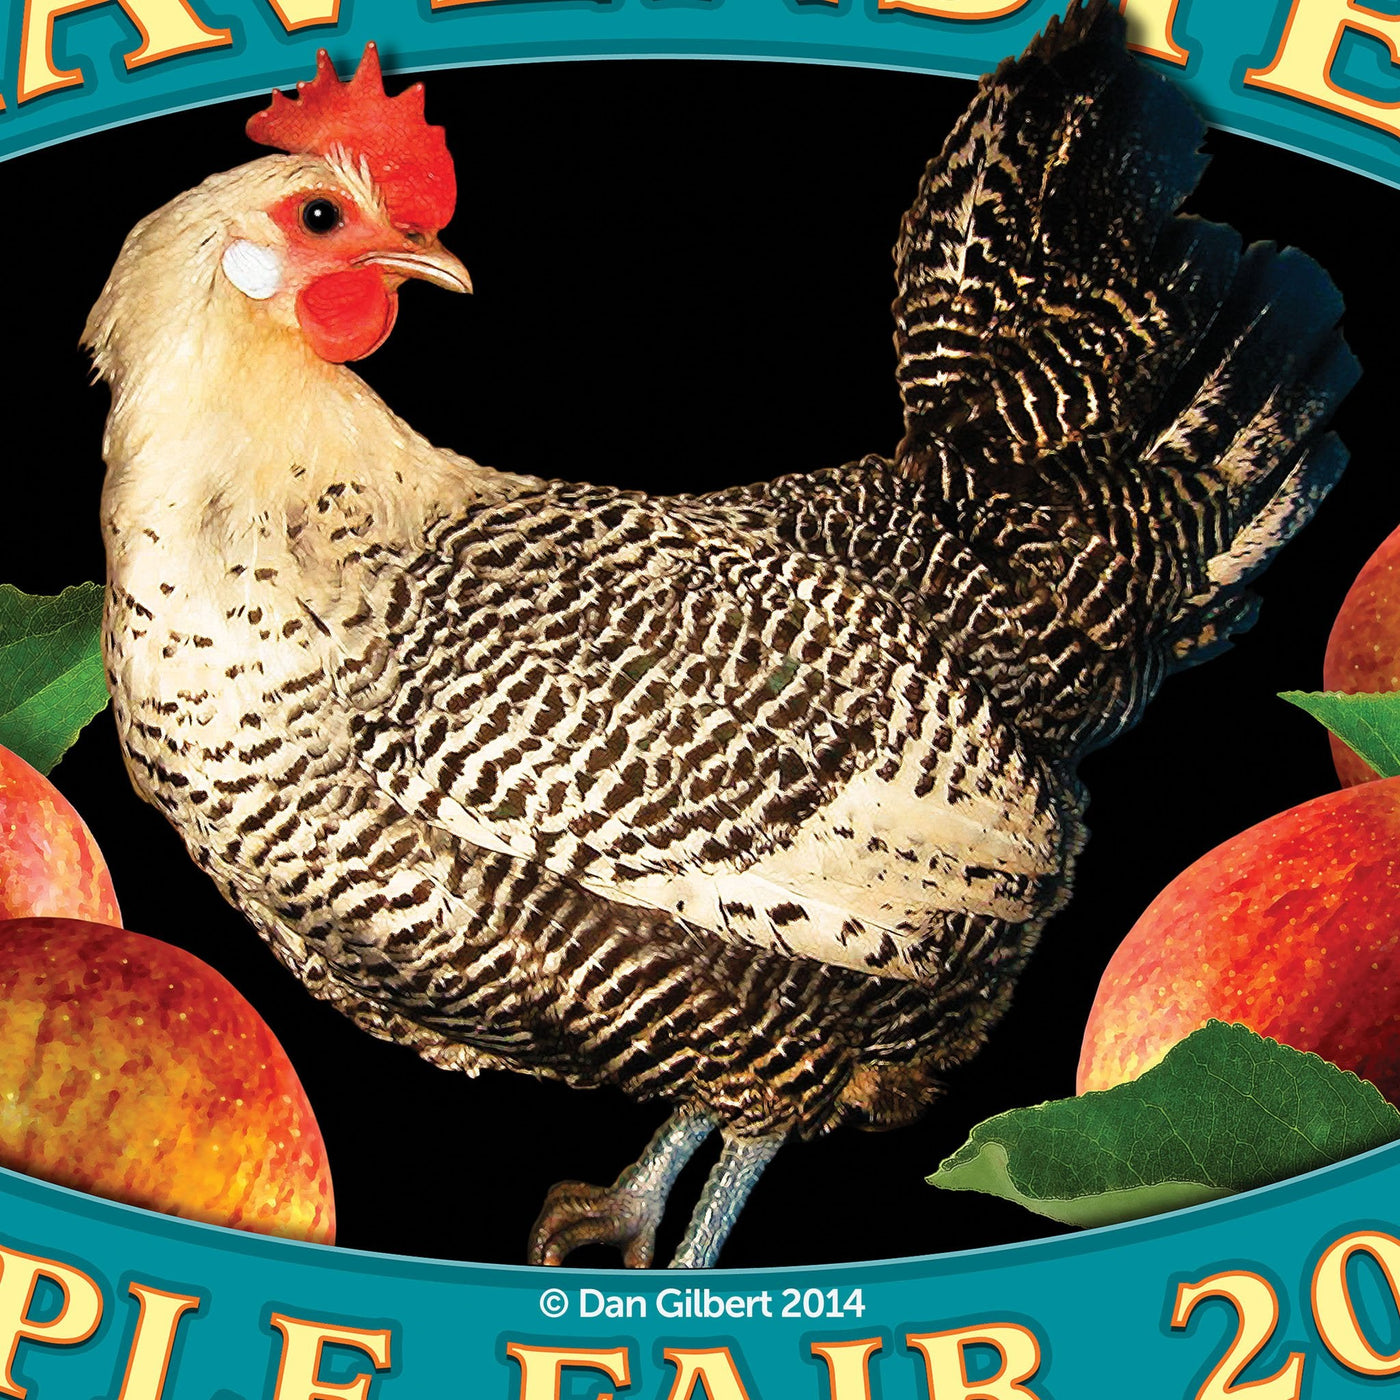 Limited Edition Giclée - Original Crate Label - Gravenstein Apple Fair 2014 (Rooster) - by Dan Gilbert